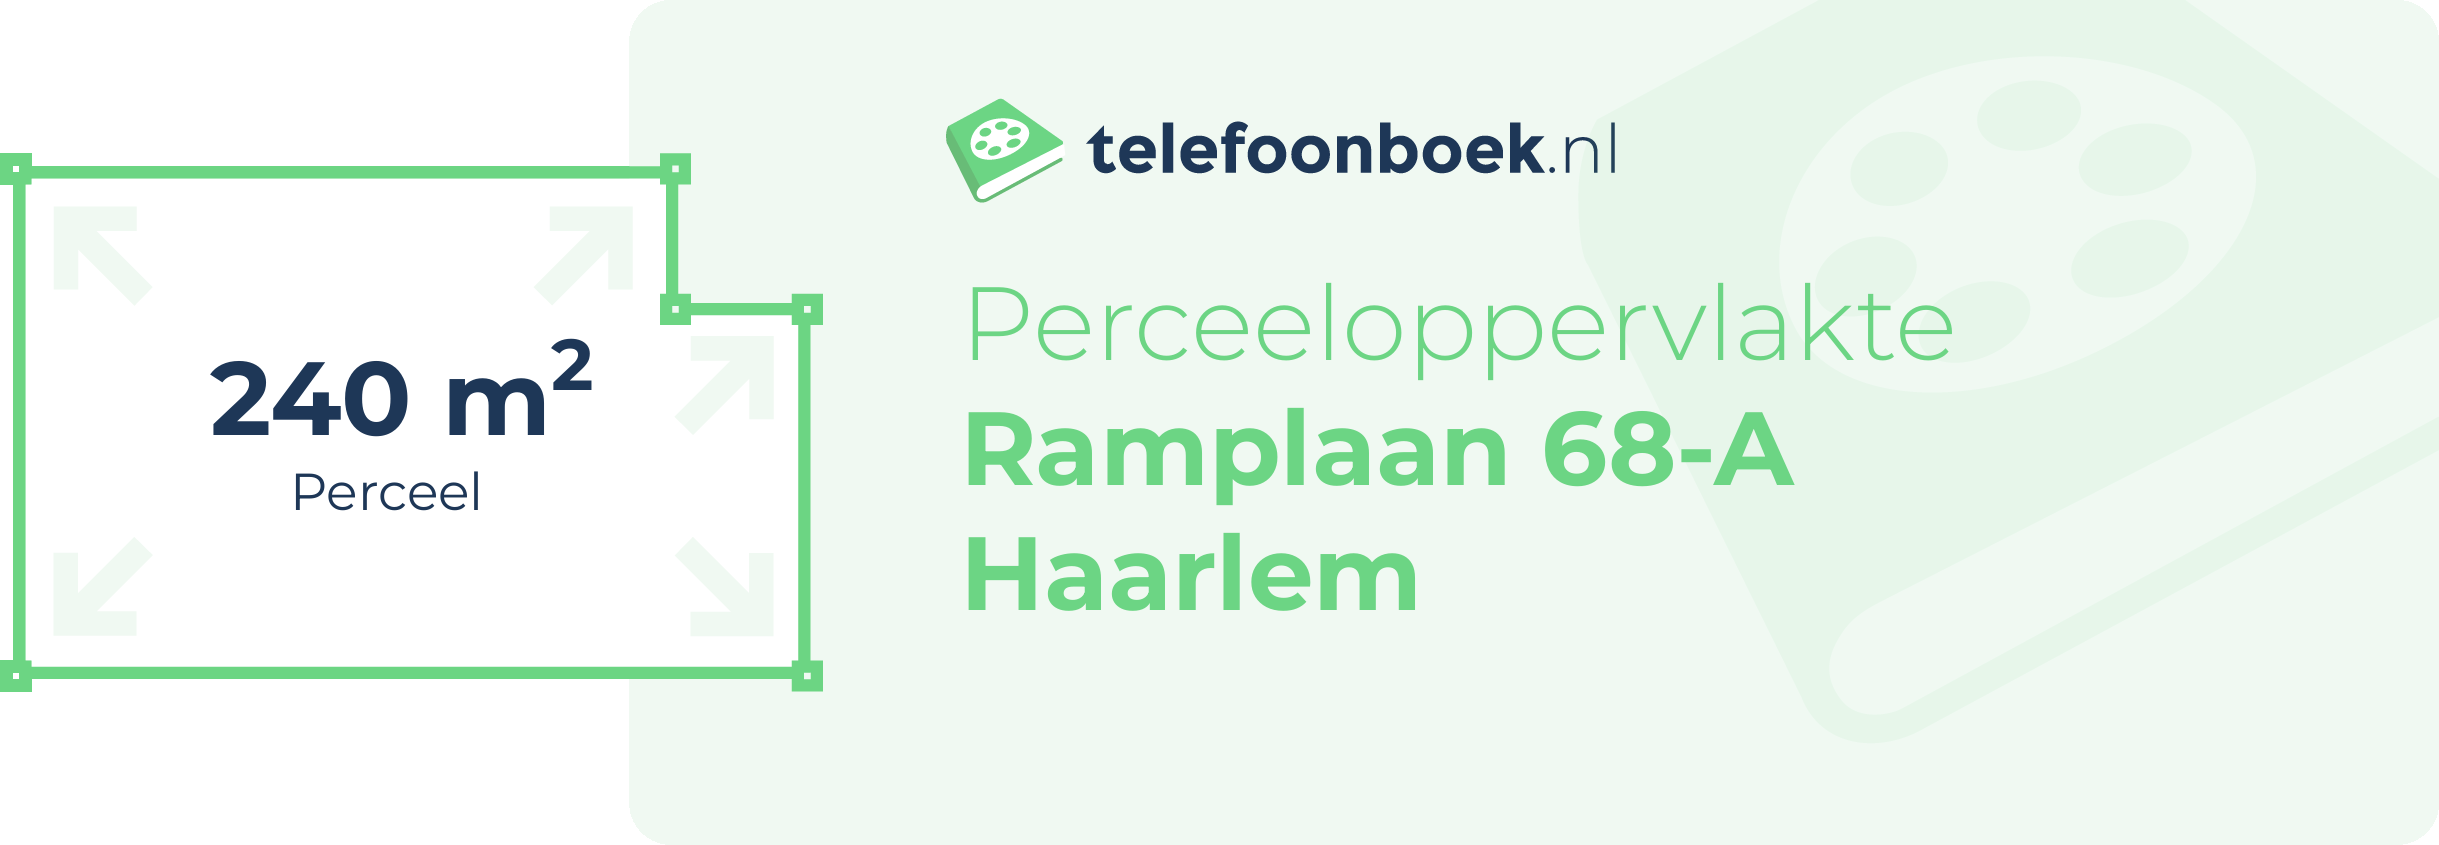 Perceeloppervlakte Ramplaan 68-A Haarlem